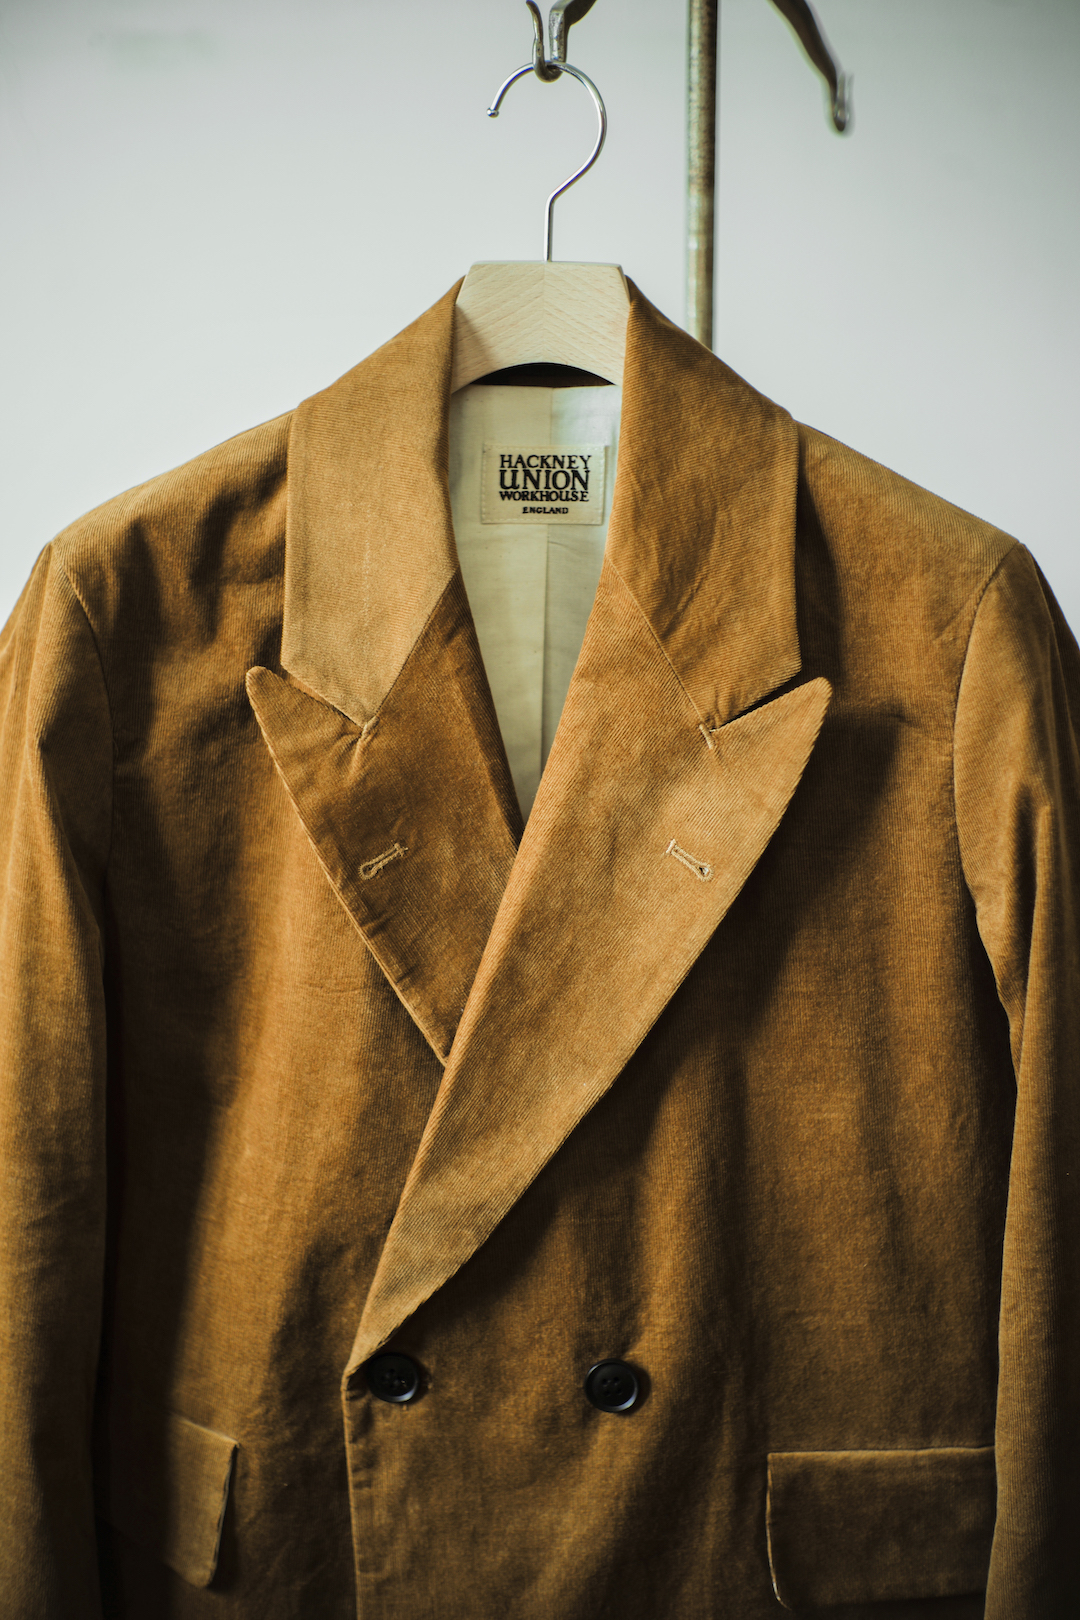 HACKNEY UNION WORKHOUSE Plangeur Jacket & Plangeur Trousers | ARCH 